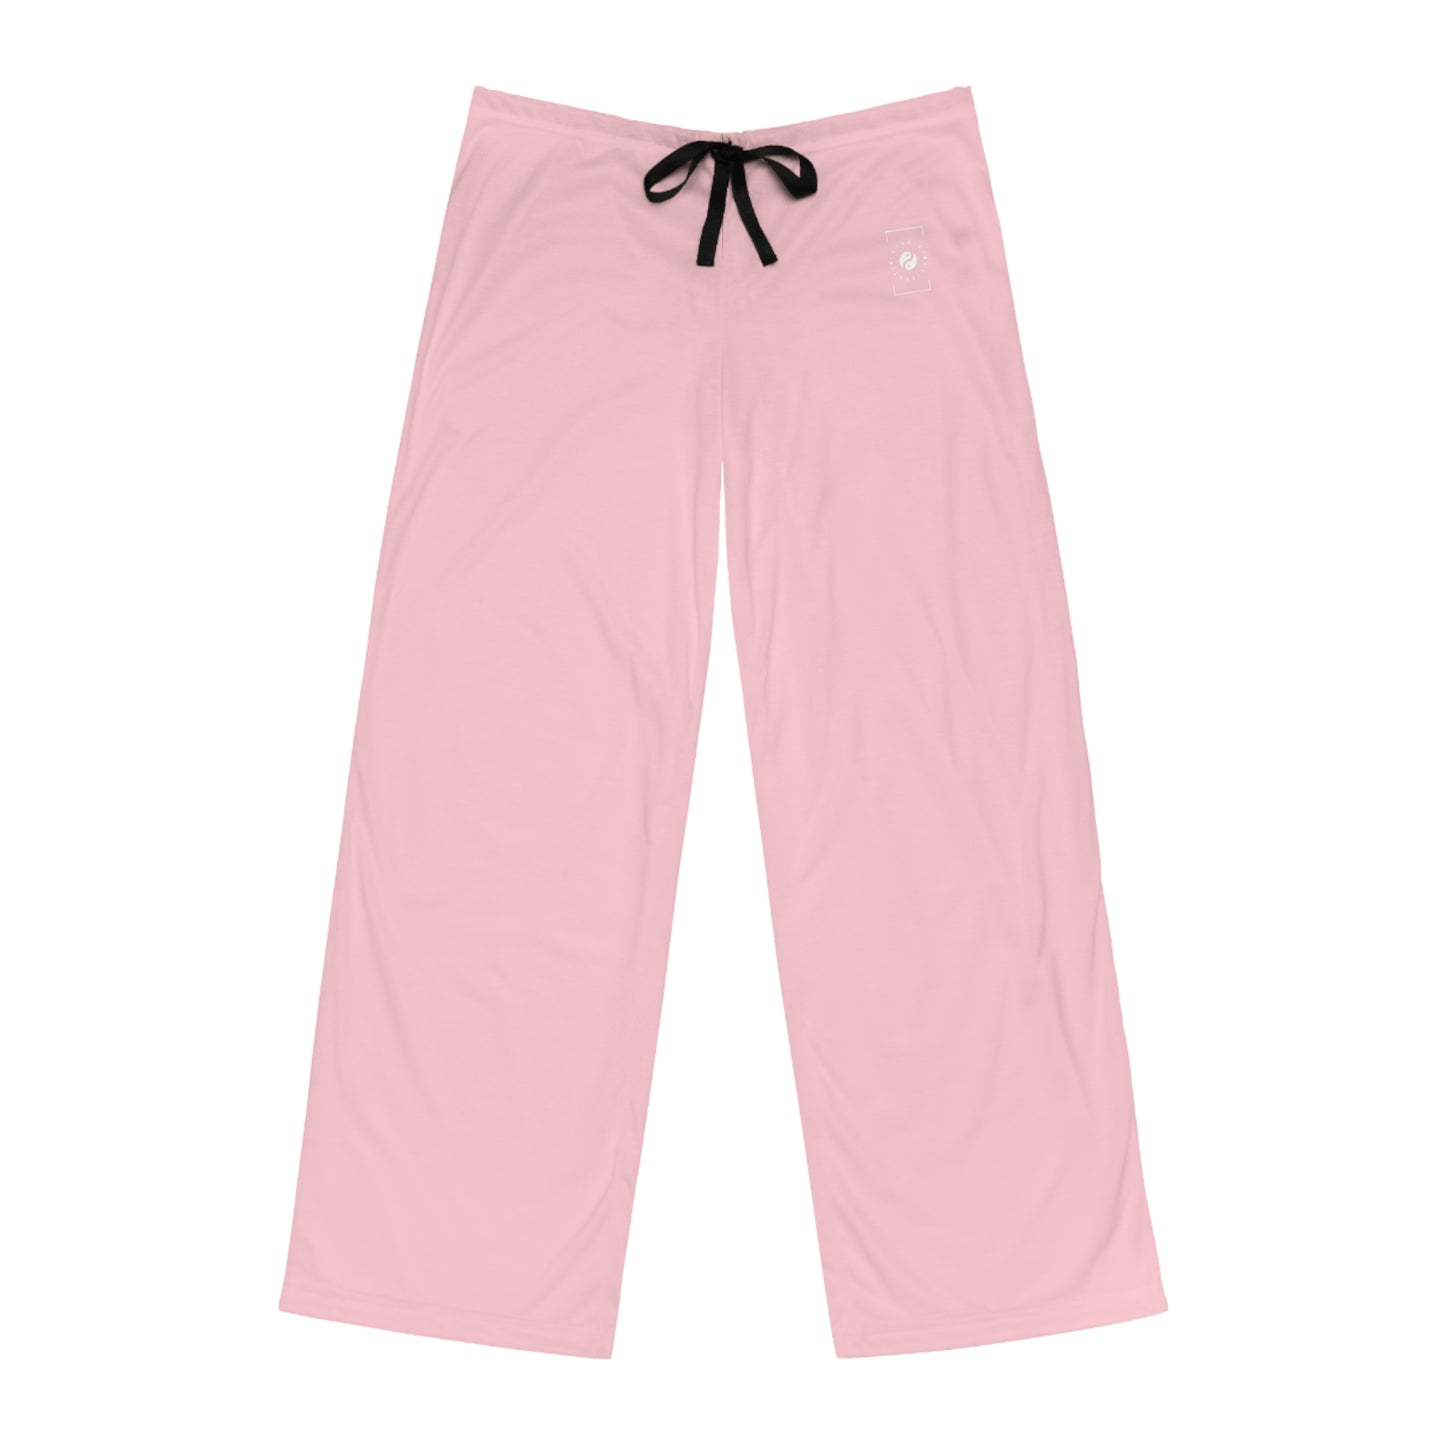 FFCCD4 Light Pink - men's Lounge Pants